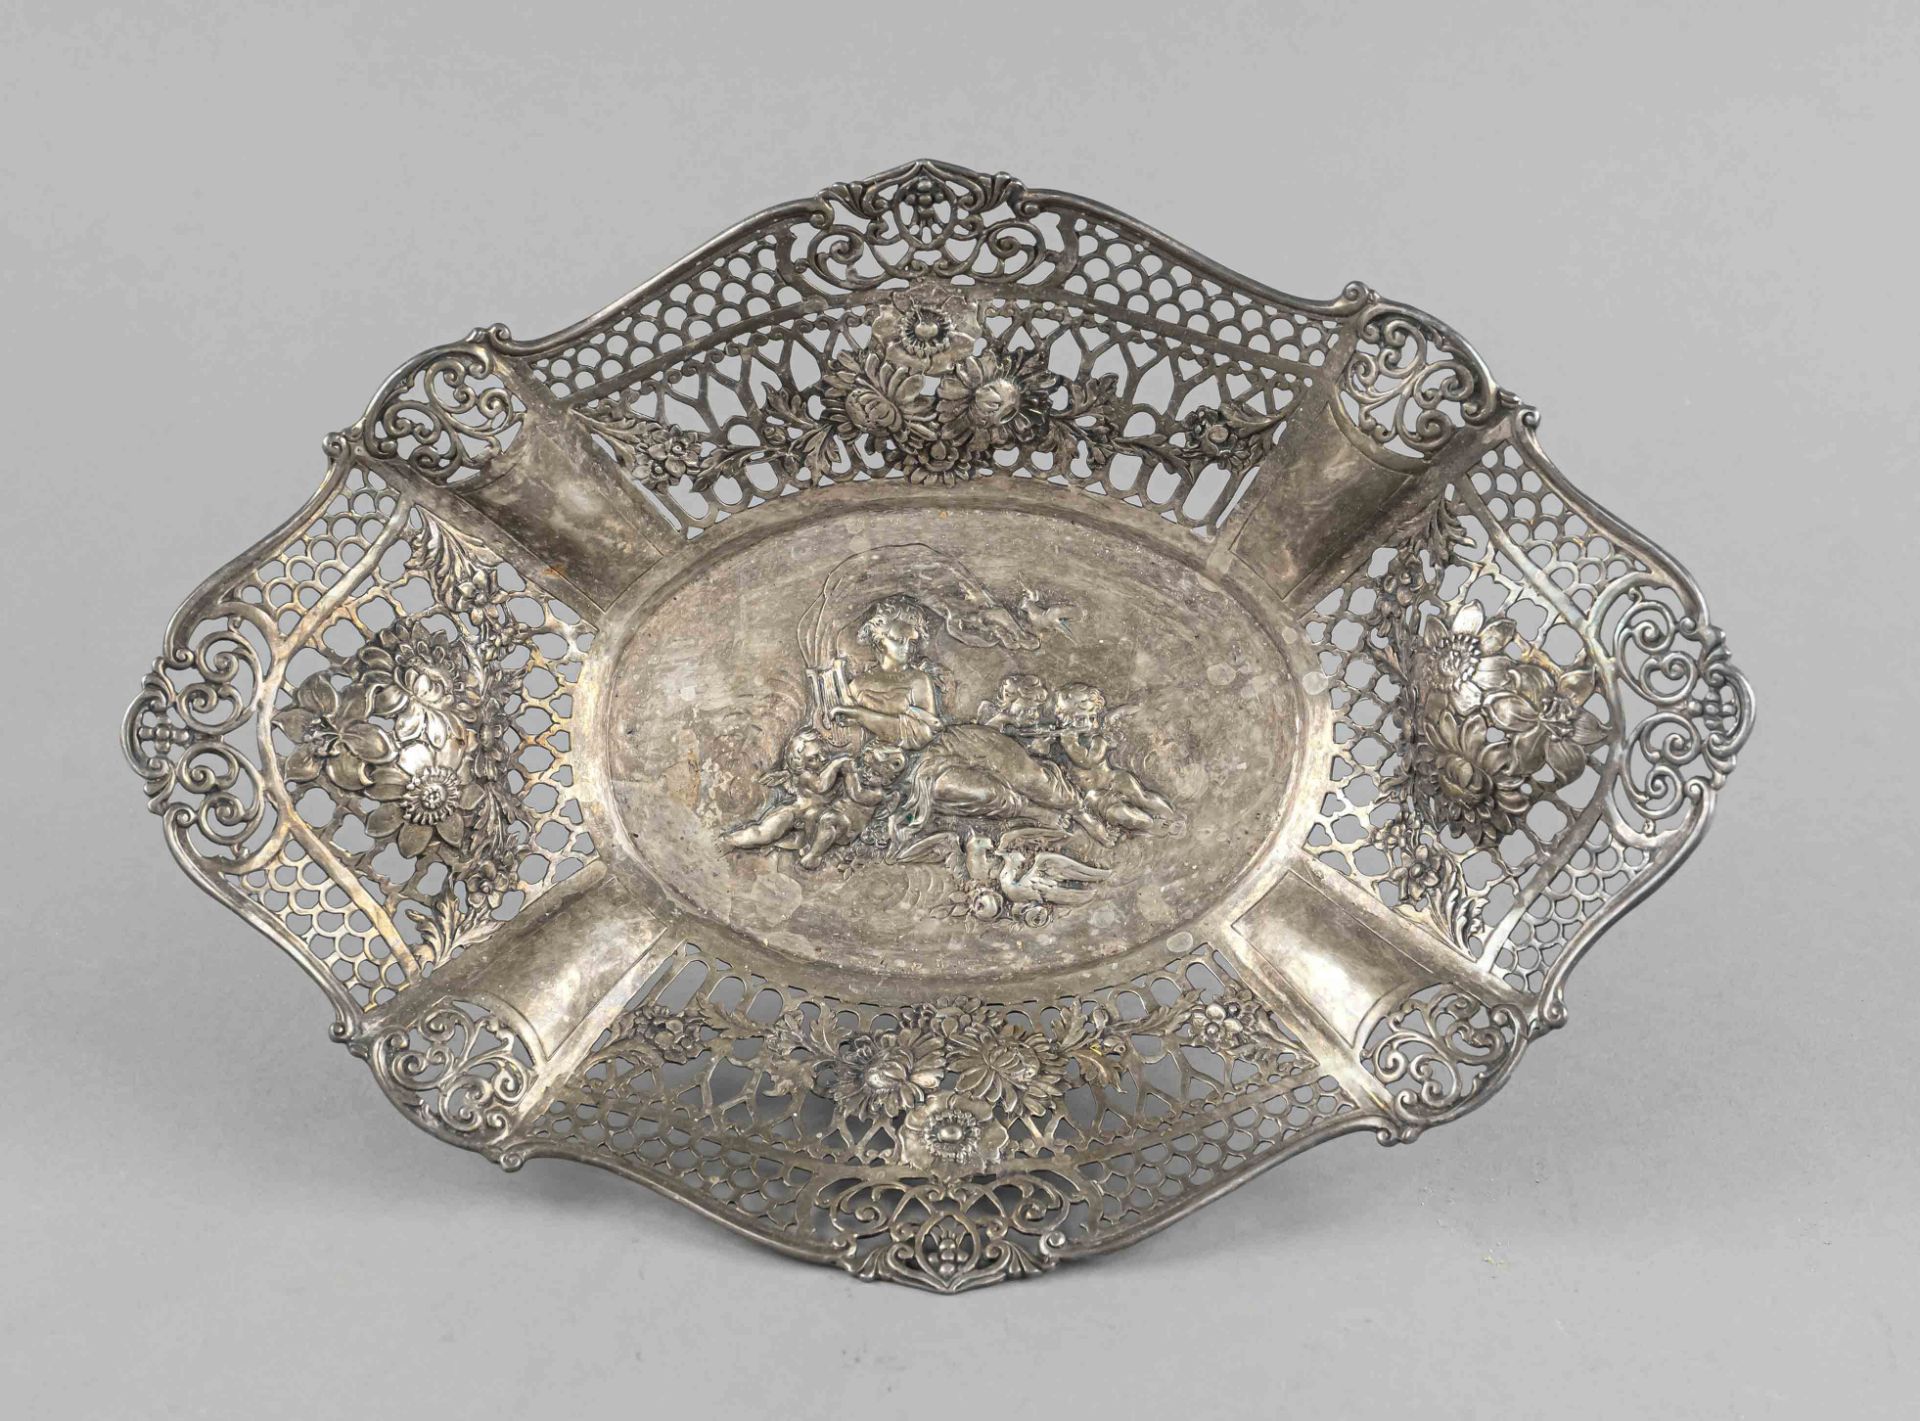 Oval basket bowl, German, early 20th c., maker's mark J. D. Schleissner & Söhne, Hanau, silver 800/